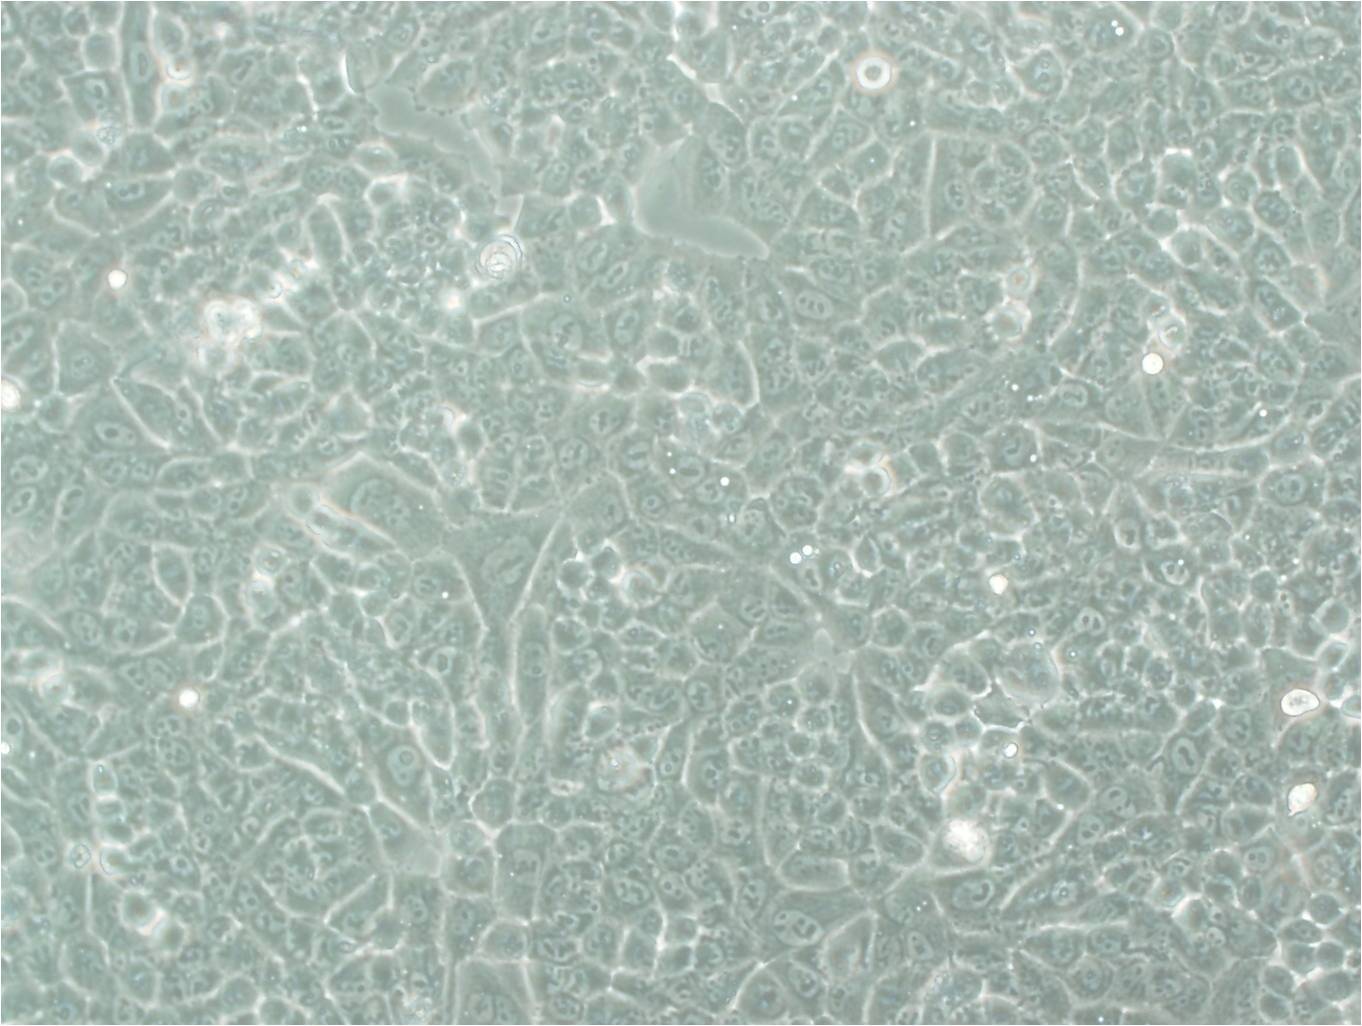 VP229 epithelioid cells人乳腺癌细胞系,VP229 epithelioid cells